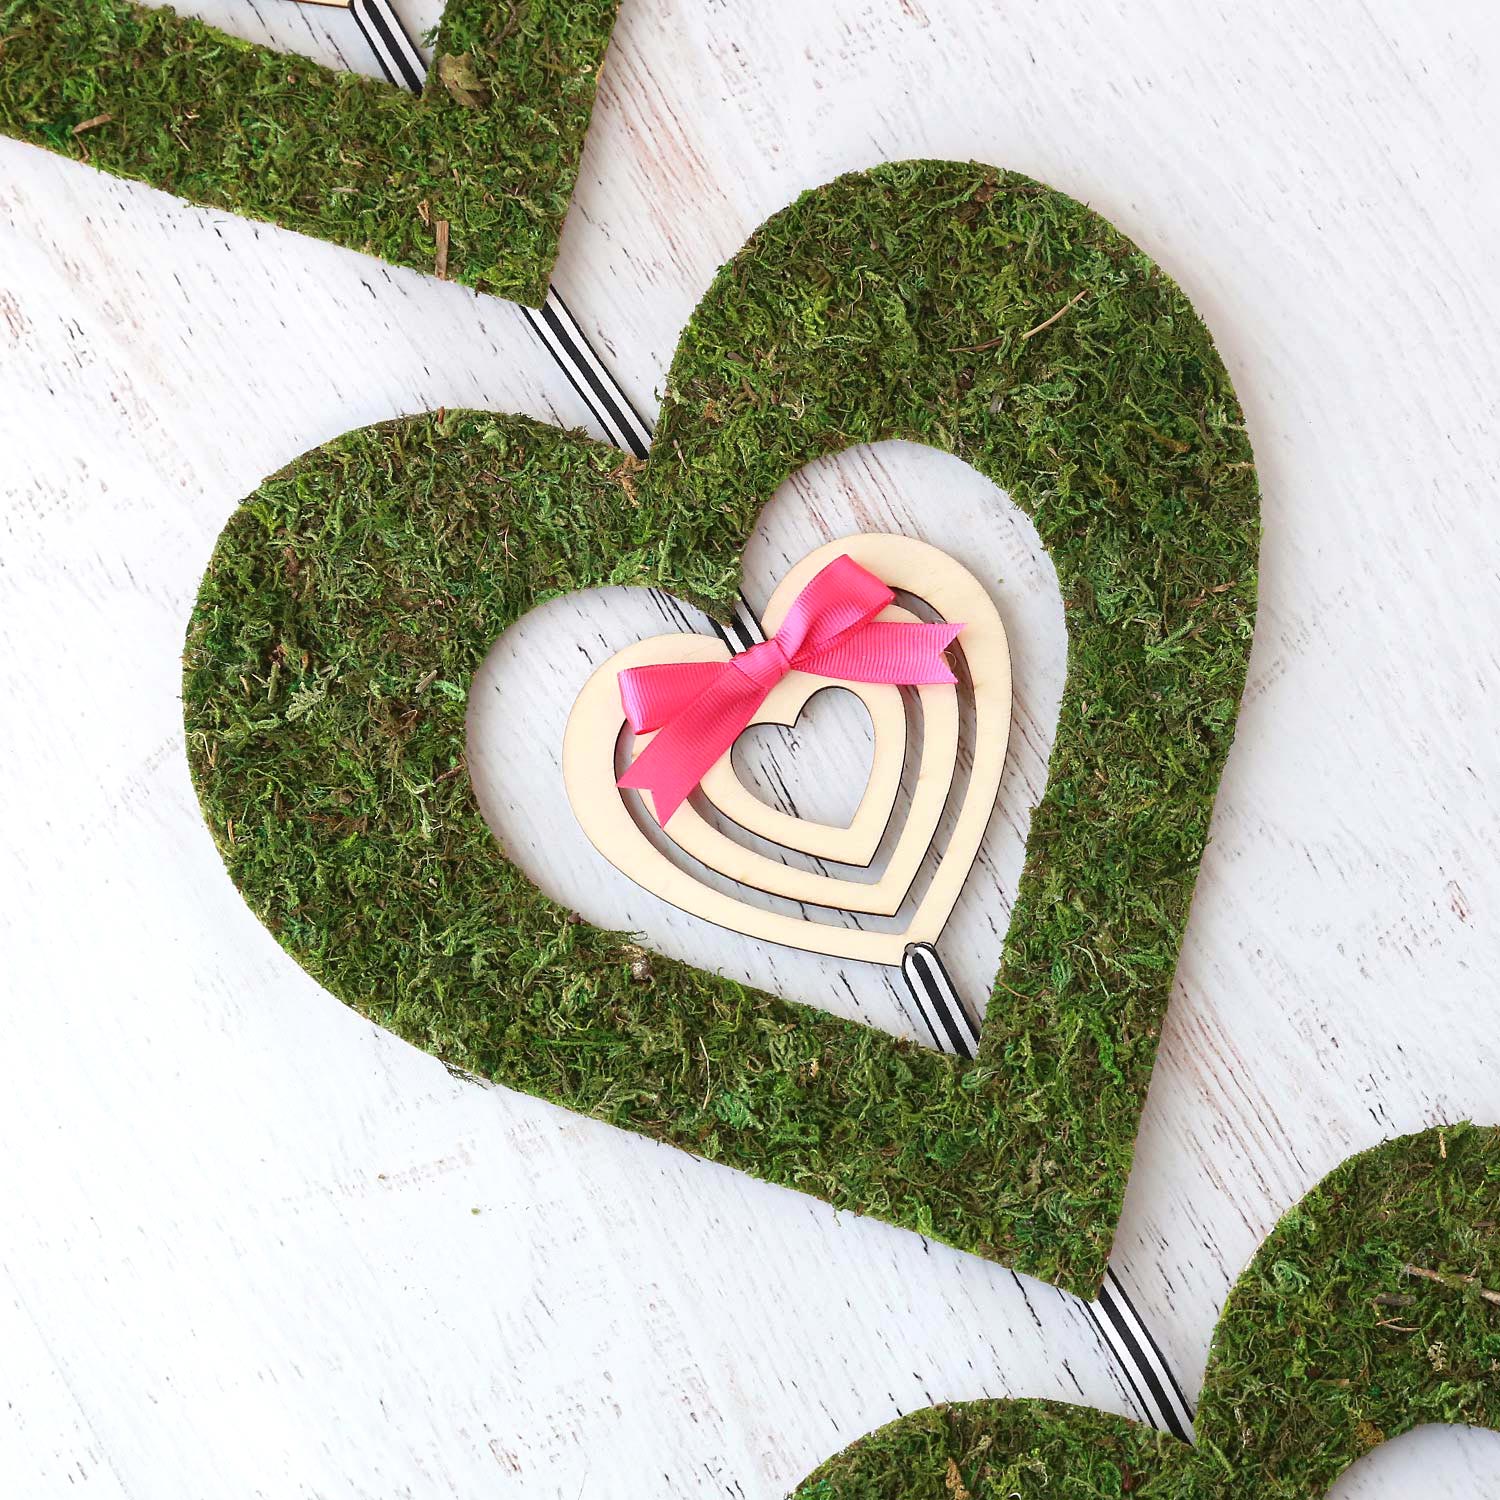 Dollar Tree Heart Wreath - Create Make Decorate with Nikki